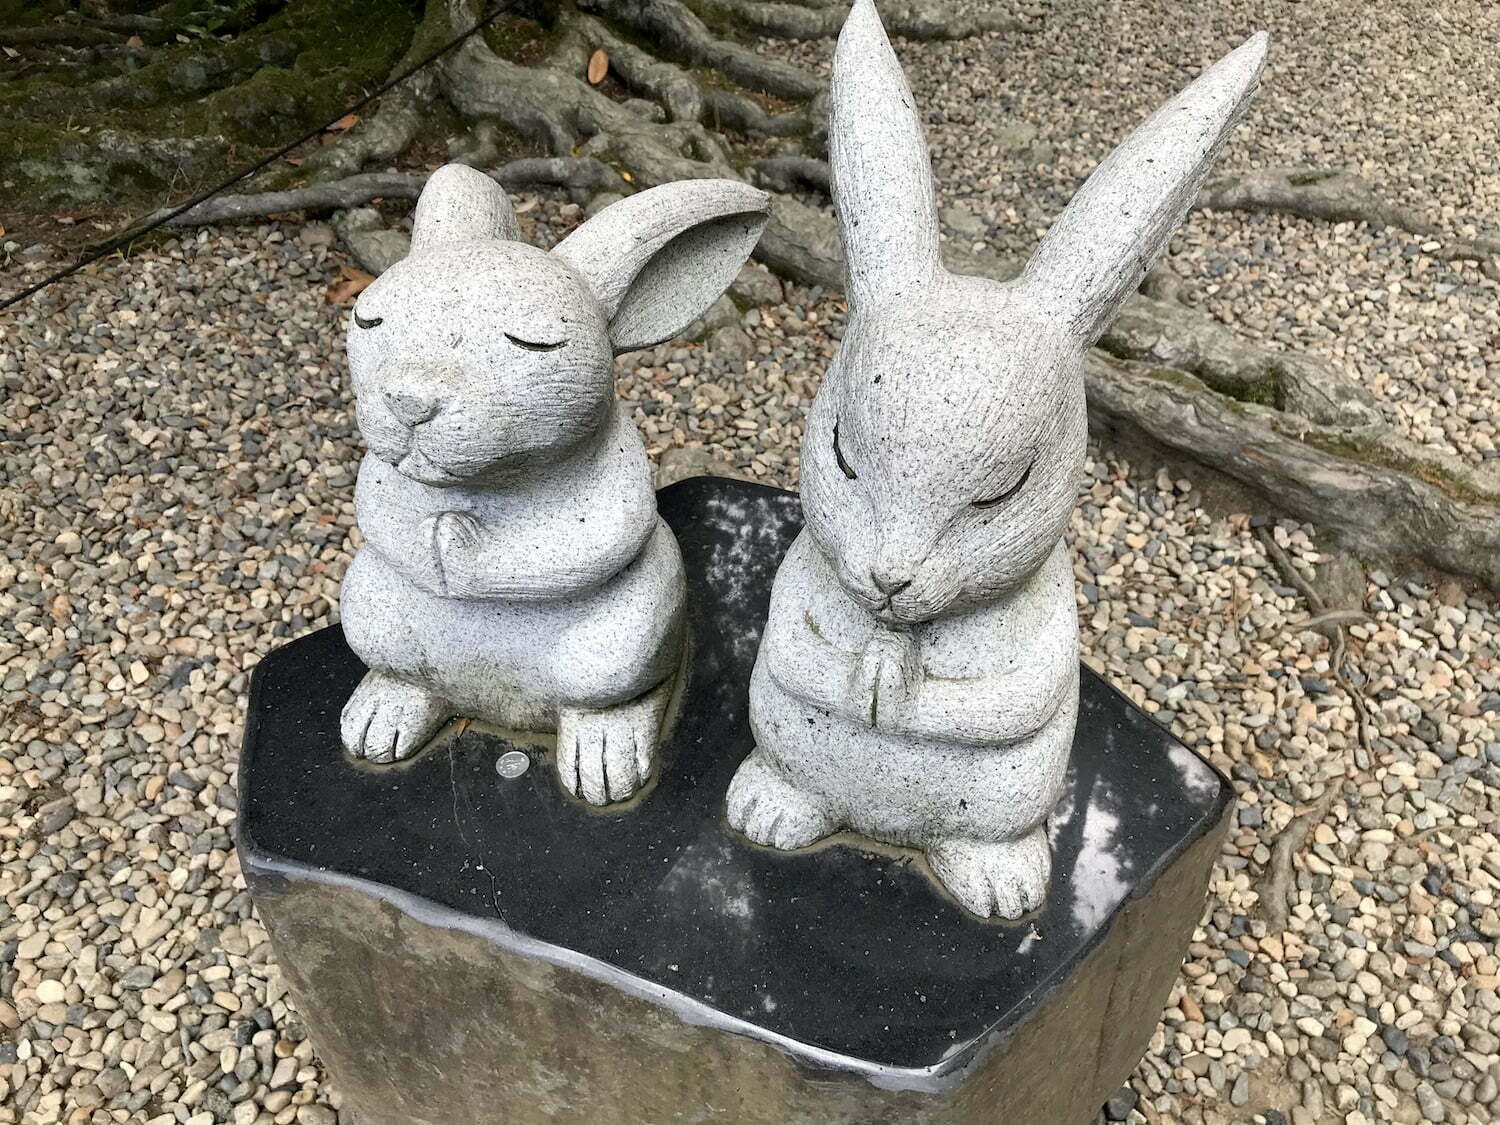 Stature of white rabbit